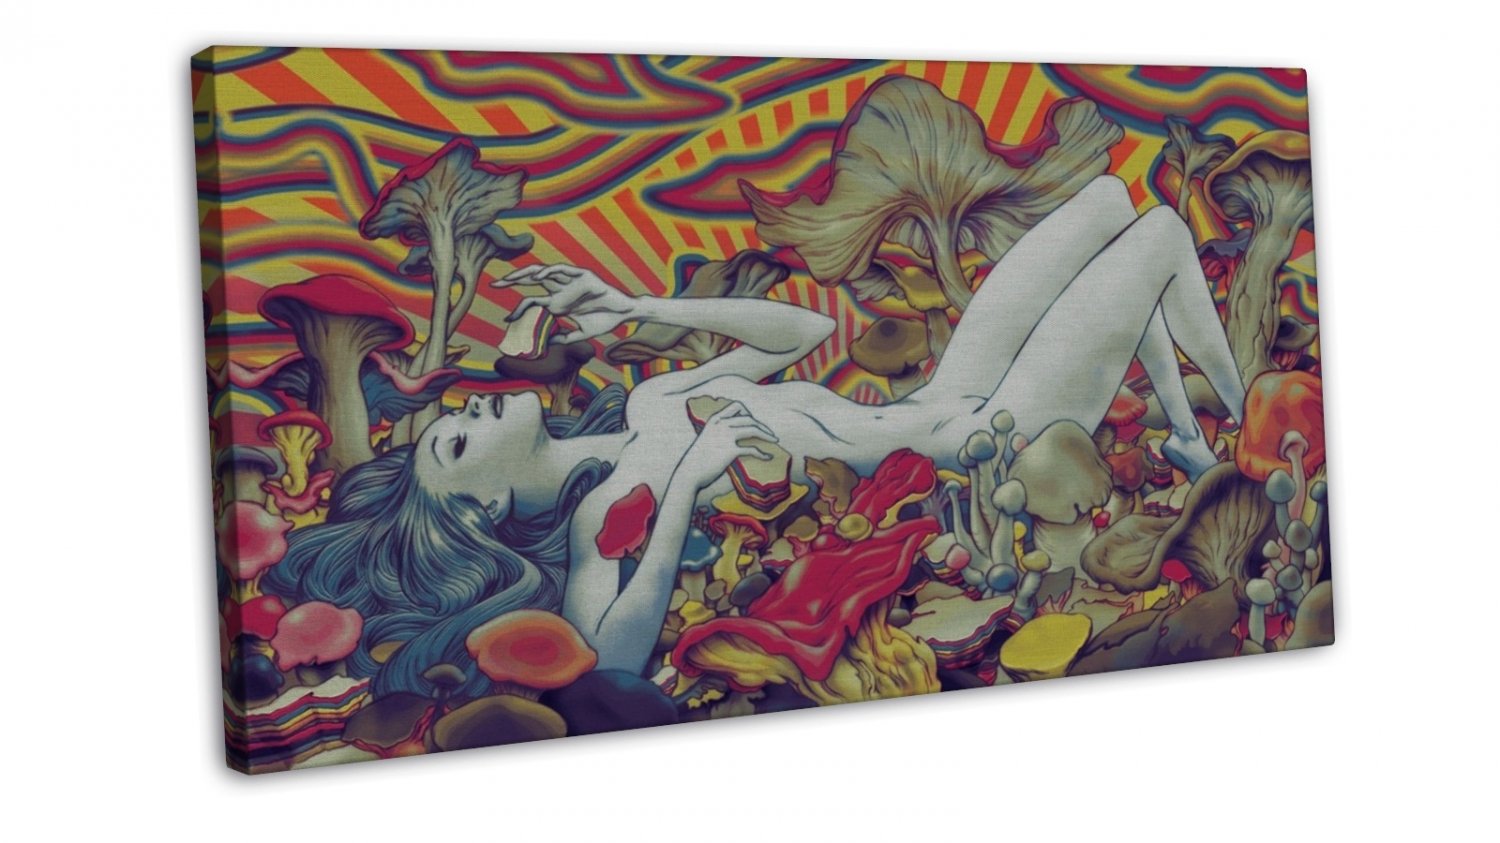 Psychedelic Trippy Art Wall Decor 20x16 inch FRAMED CANVAS Print.